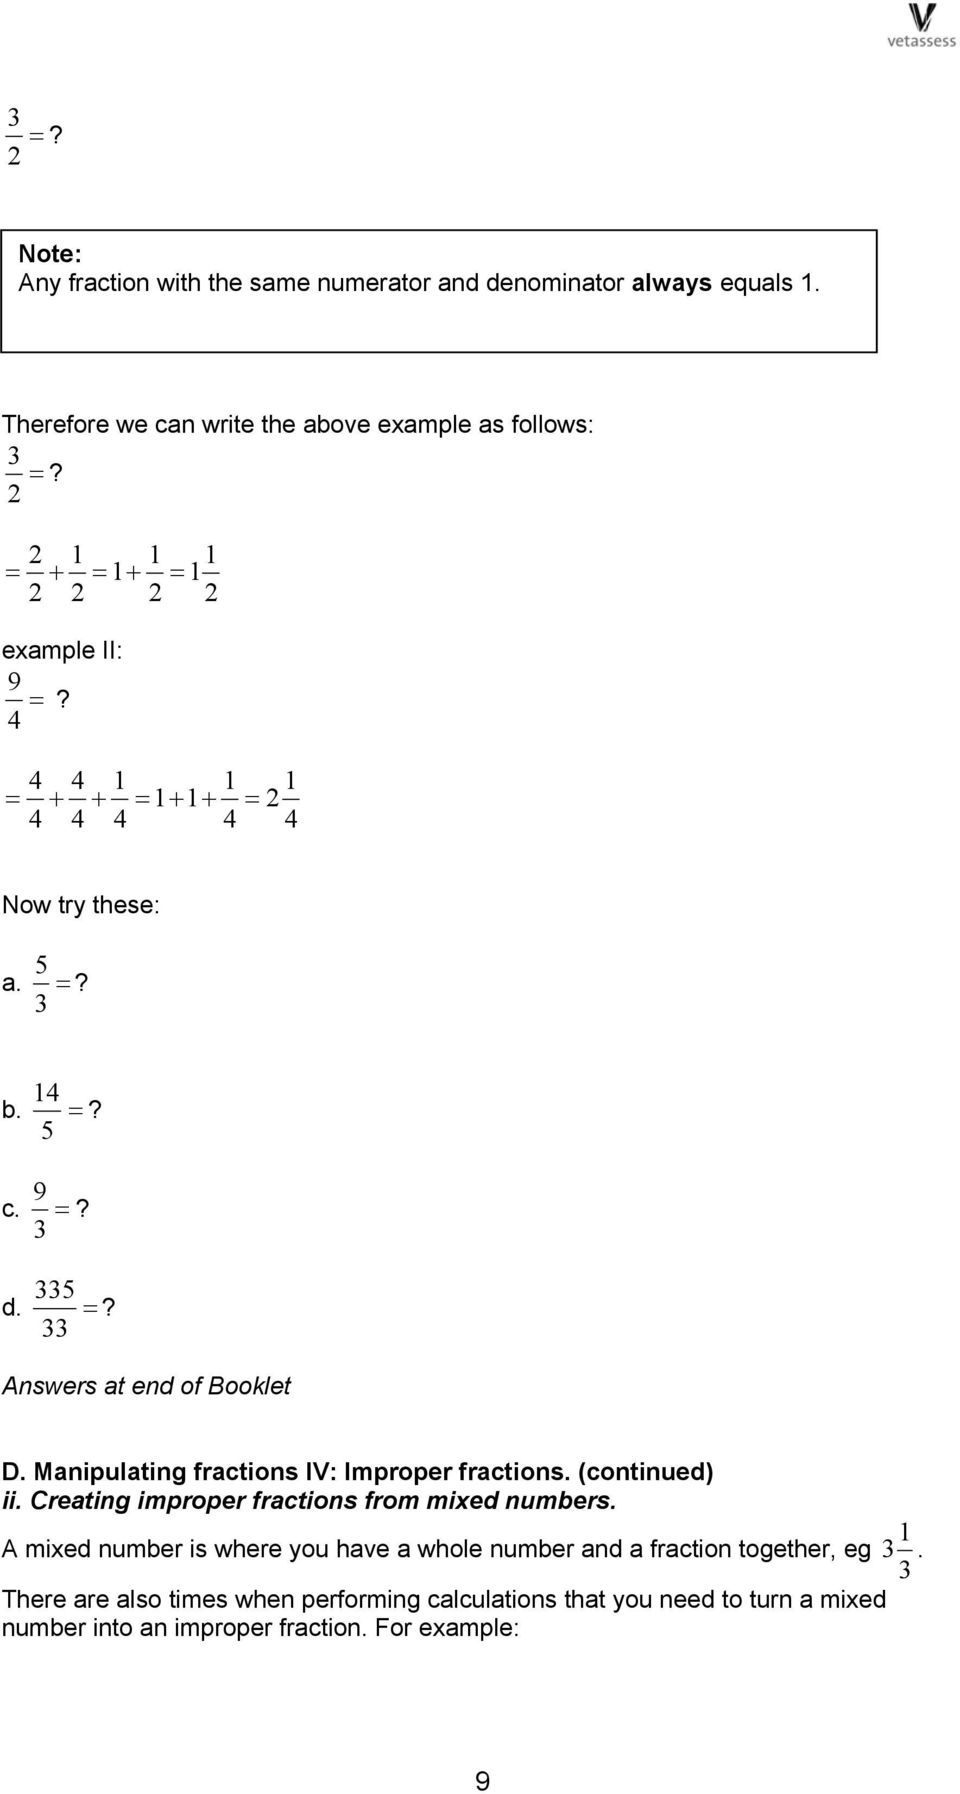 Manipulating fractions IV: Improper fractions. (continued) ii. Creating improper fractions from mixed numbers.